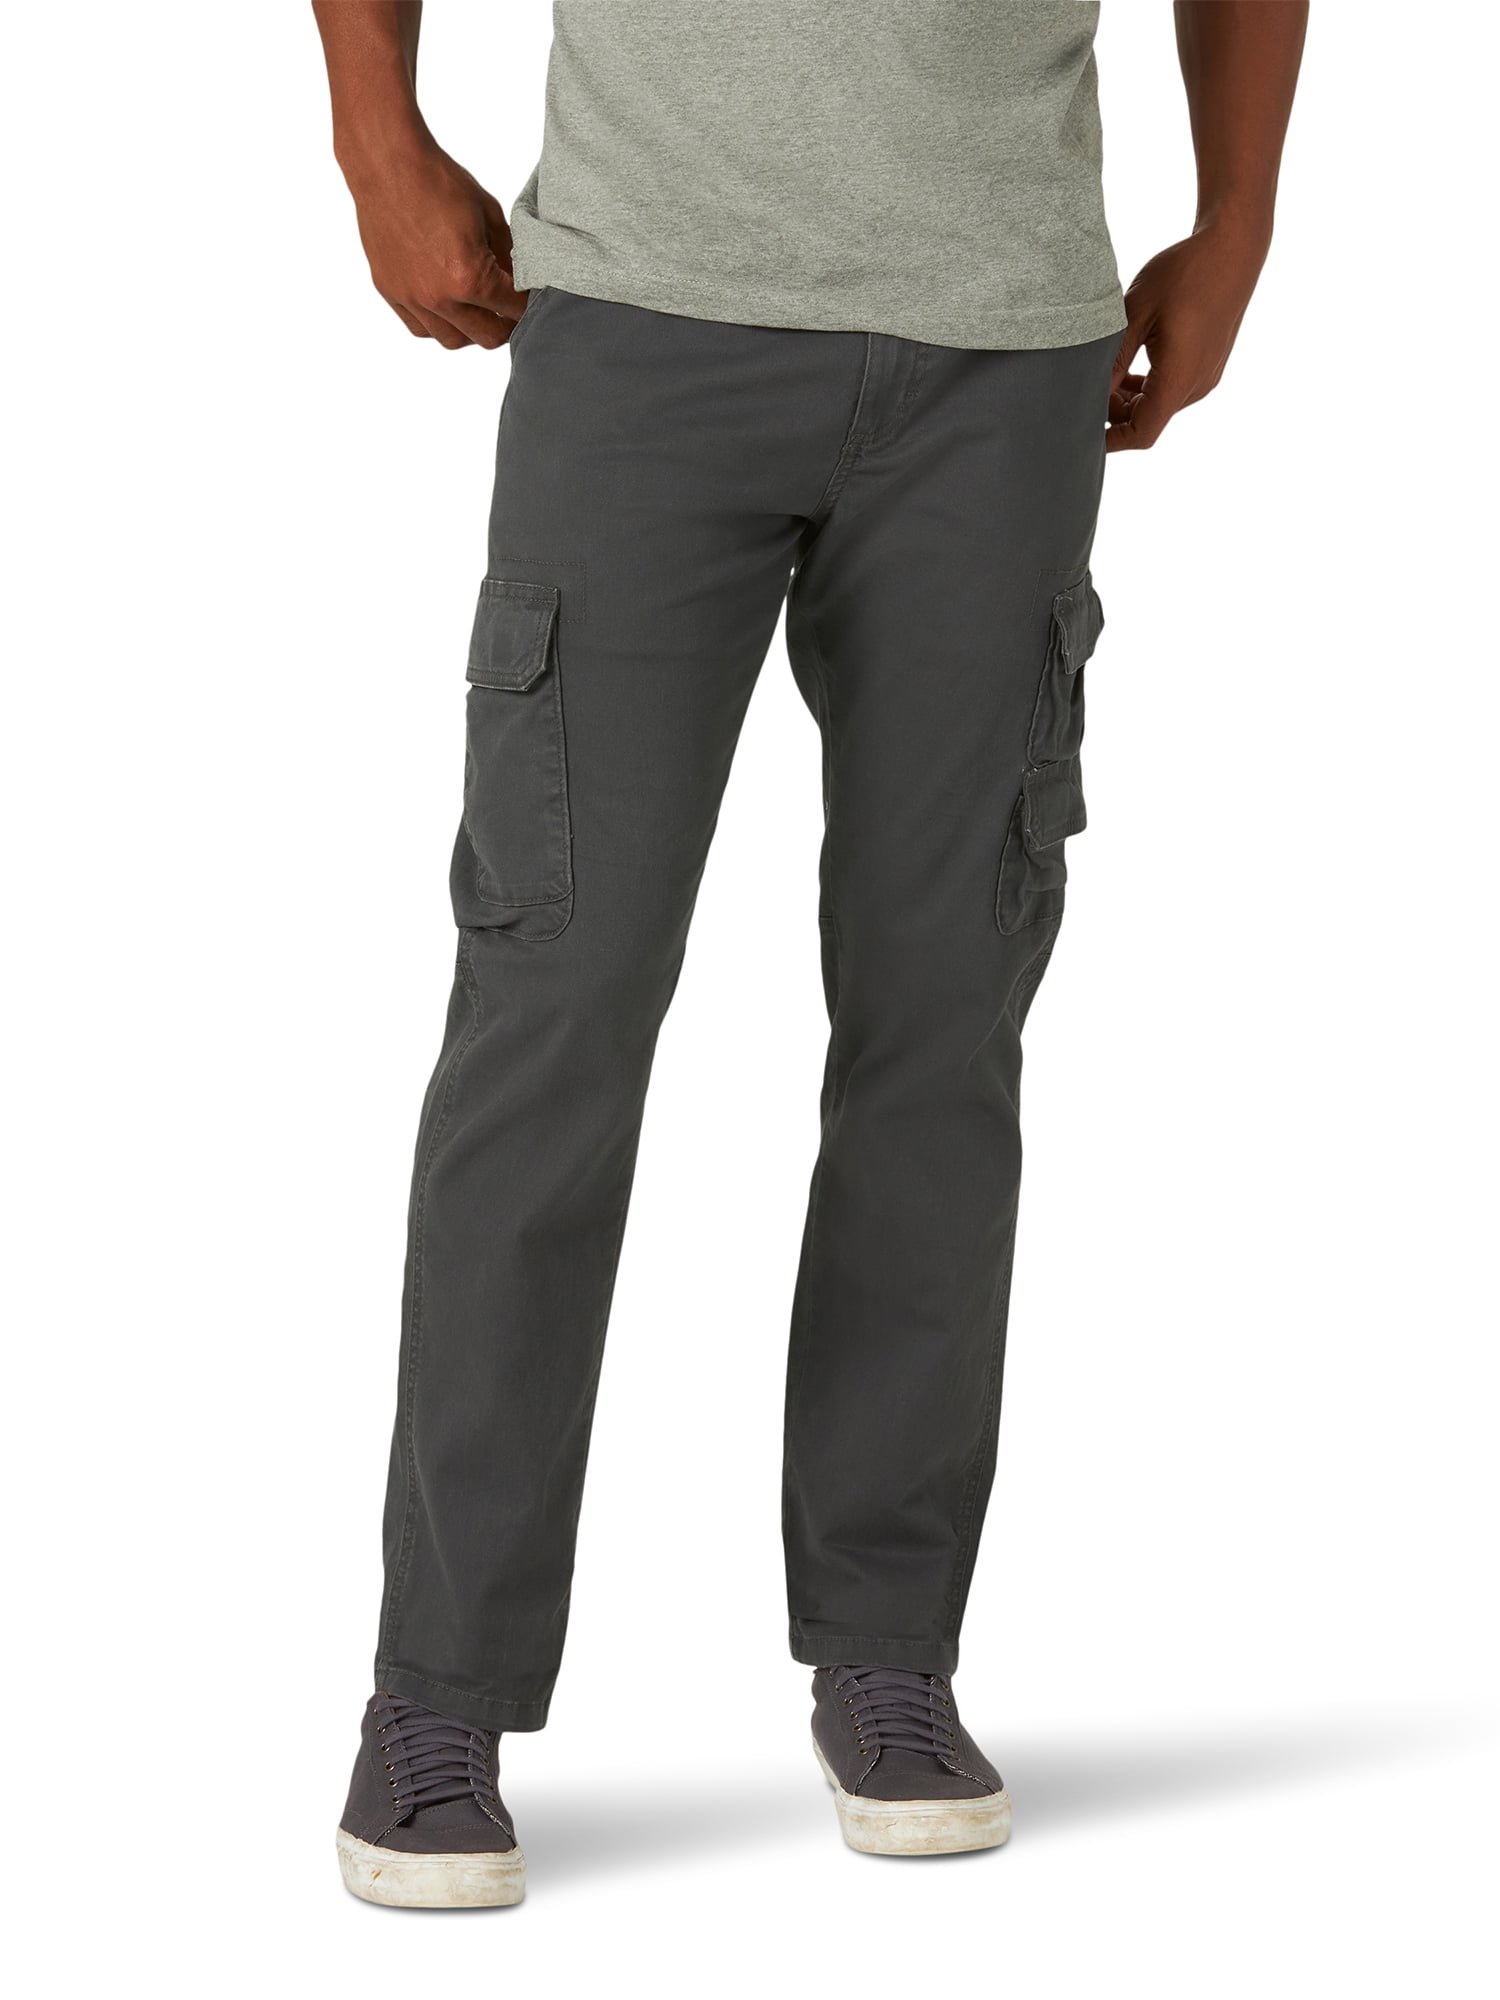 Wrangler | Pants | Mens Wrangler Pleated Khaki Pants Comfort Solution  Seriessz 32x3 | Poshmark